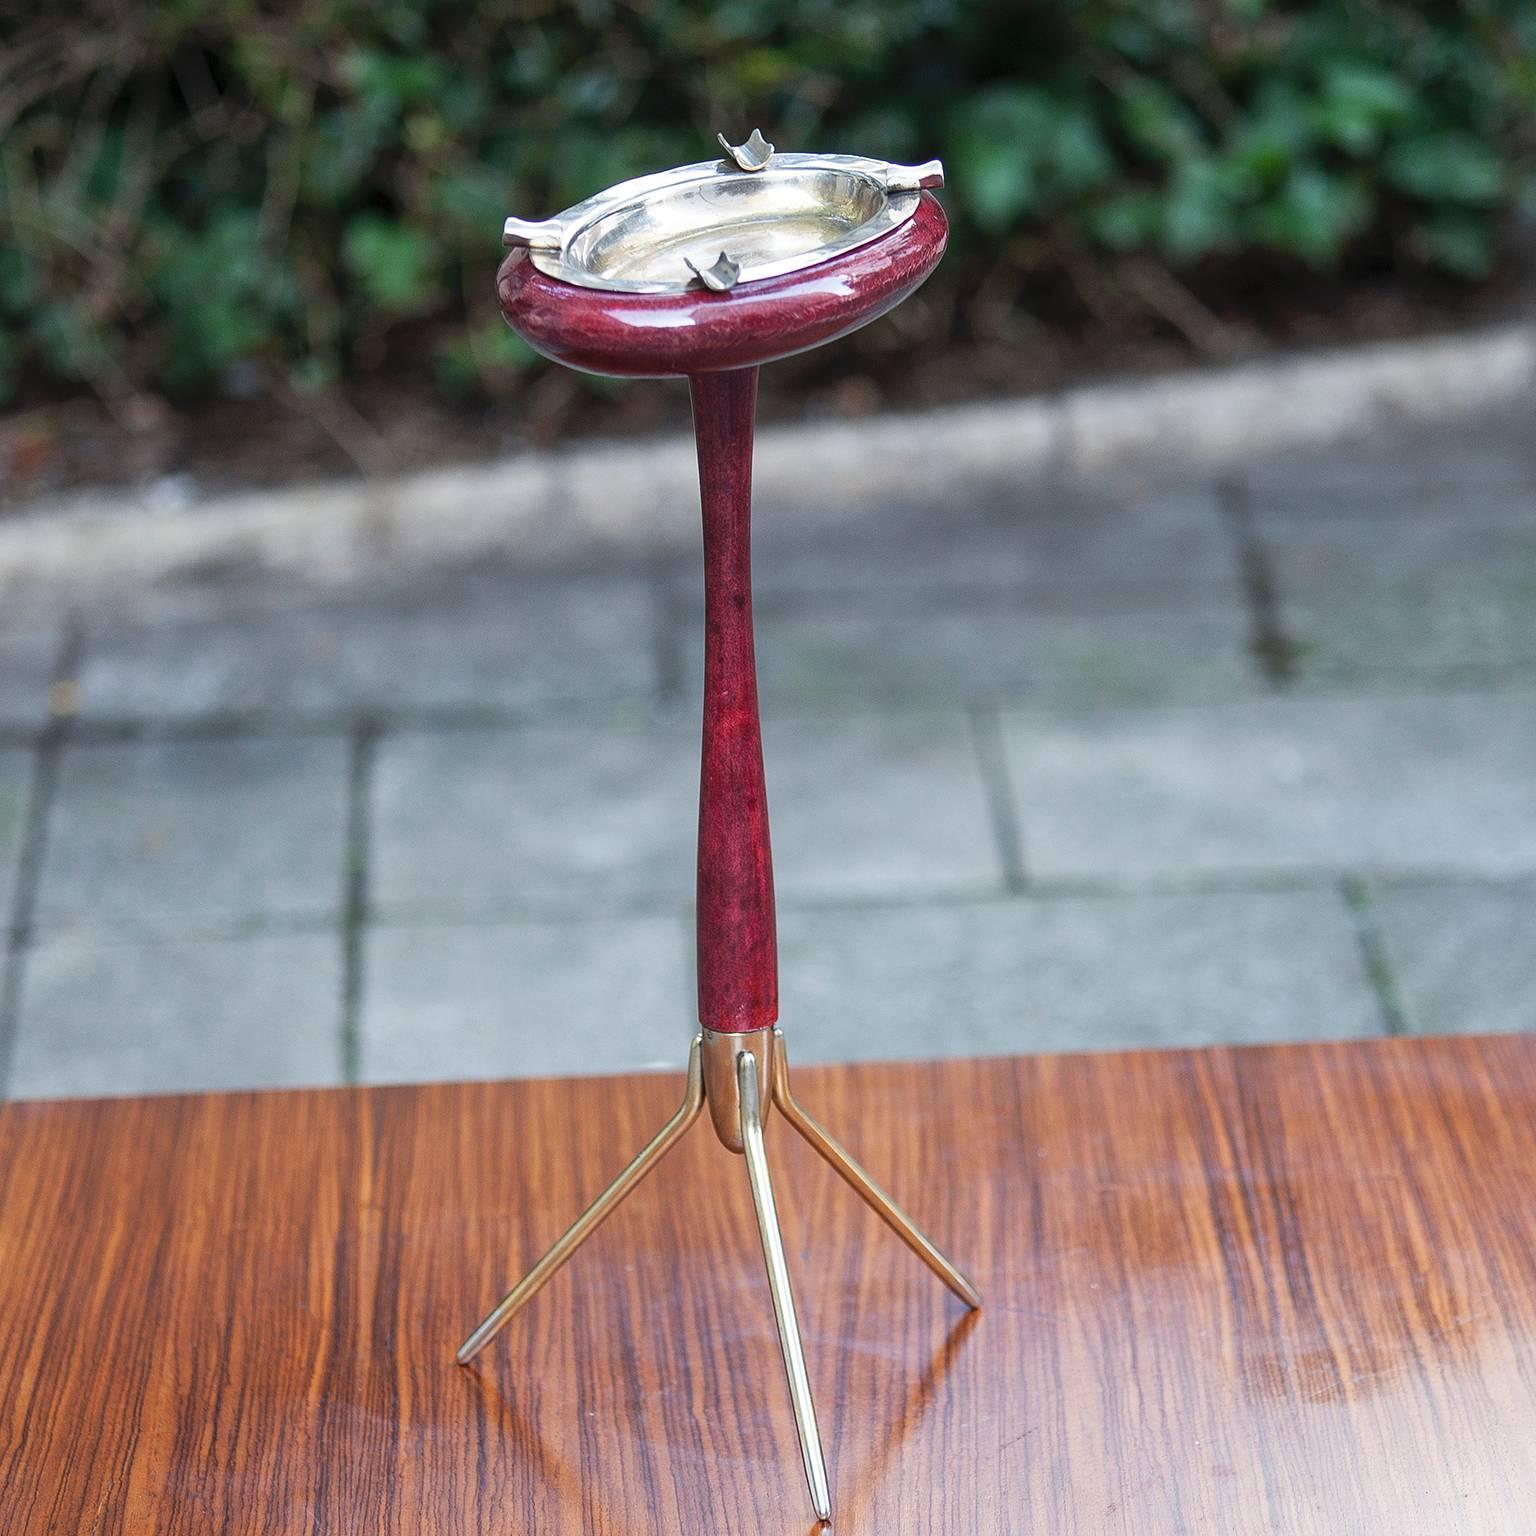 Aldo Tura tripod standing ashtray Red Goatskin

Measures: H 48 D 22.